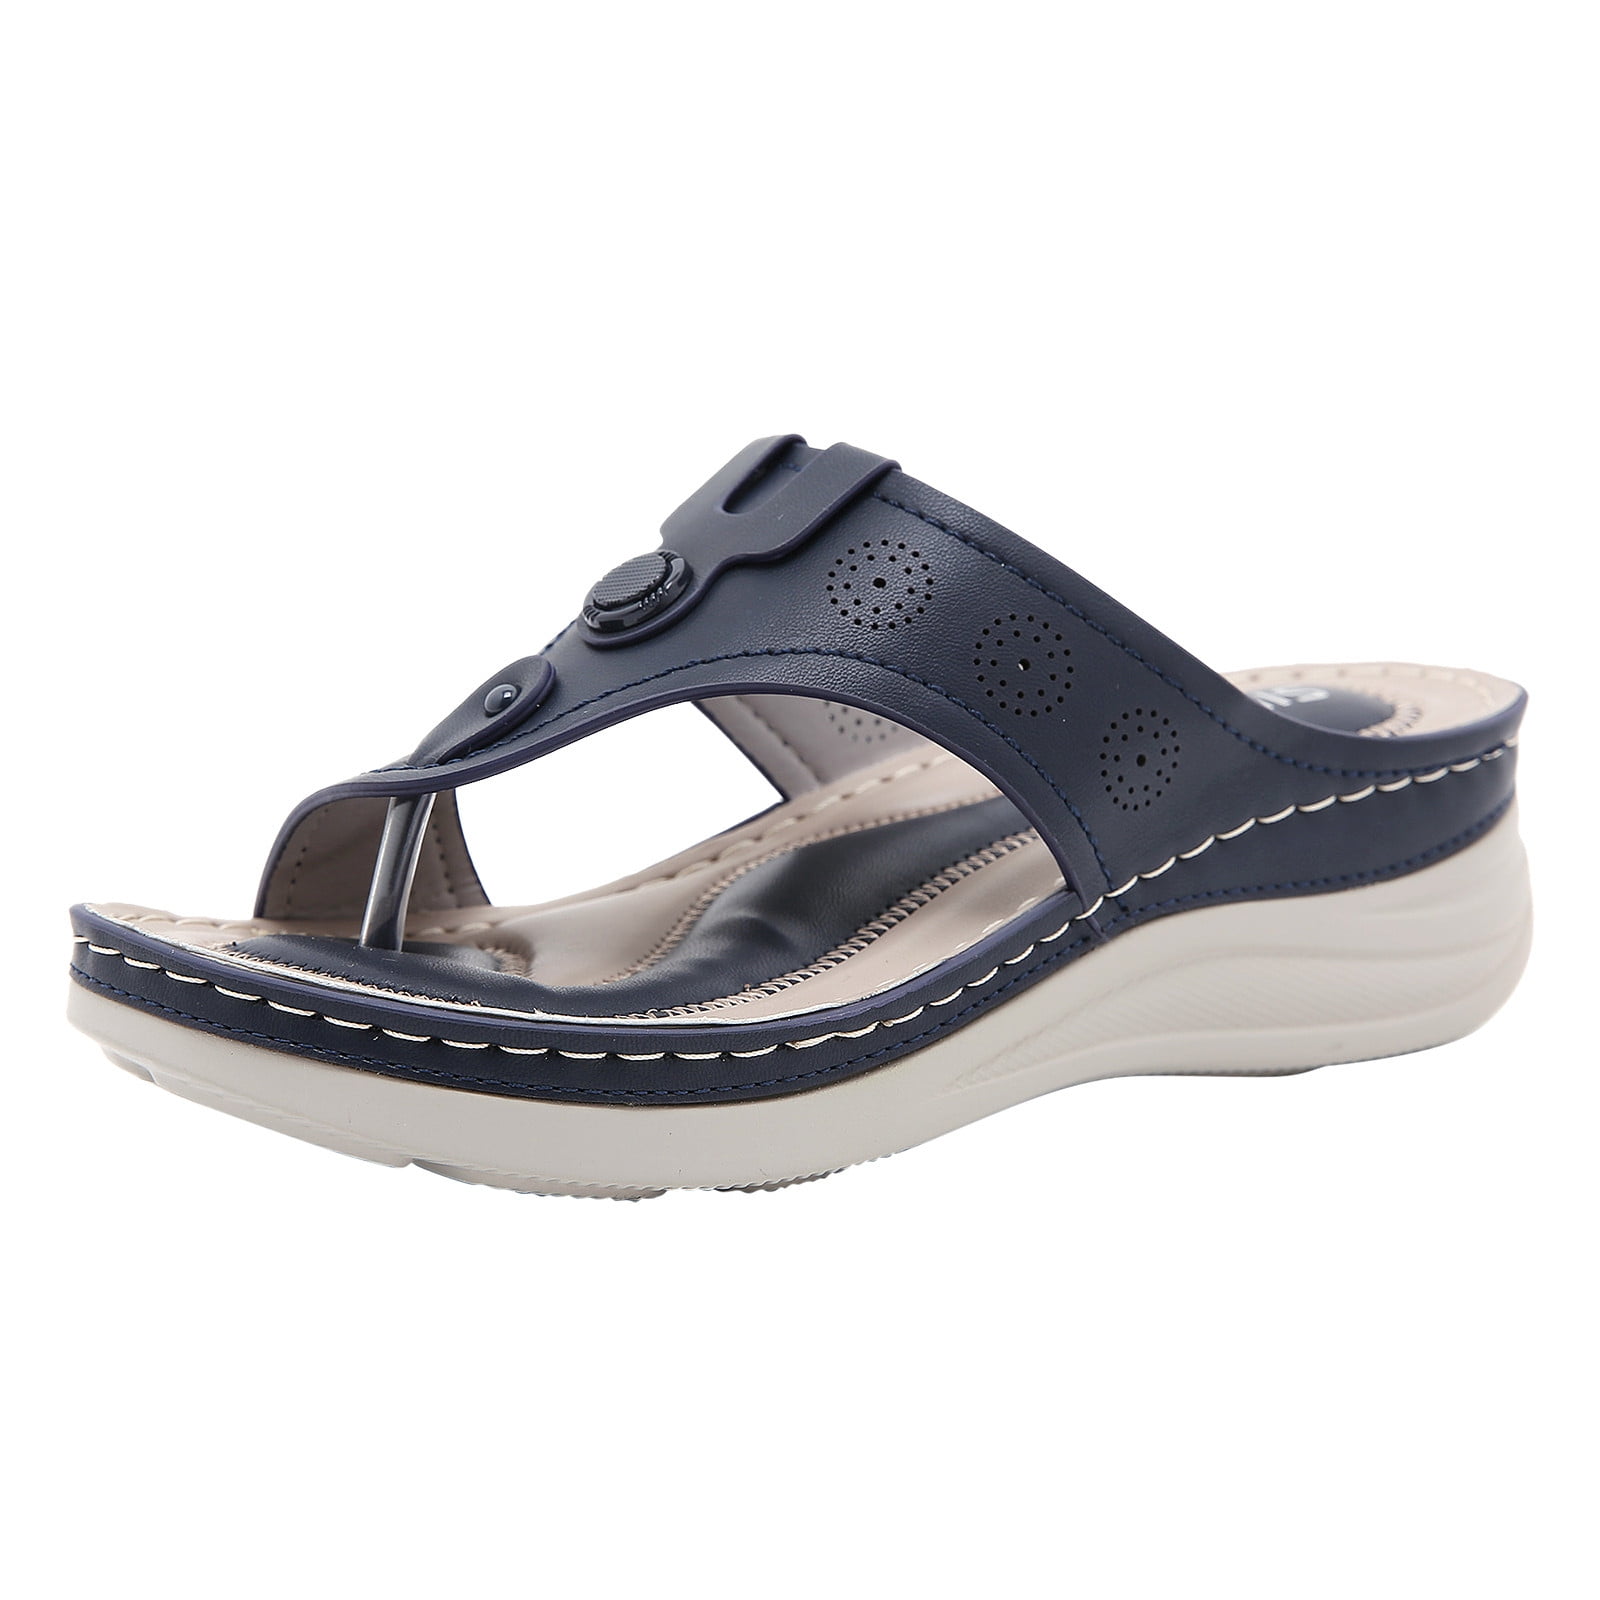 wedge sandals for women dressy Summer Casual Flip Flops Comfy Non-Slip Orthopedic Walking Thongs Slide Flat Sandals - Walmart.com